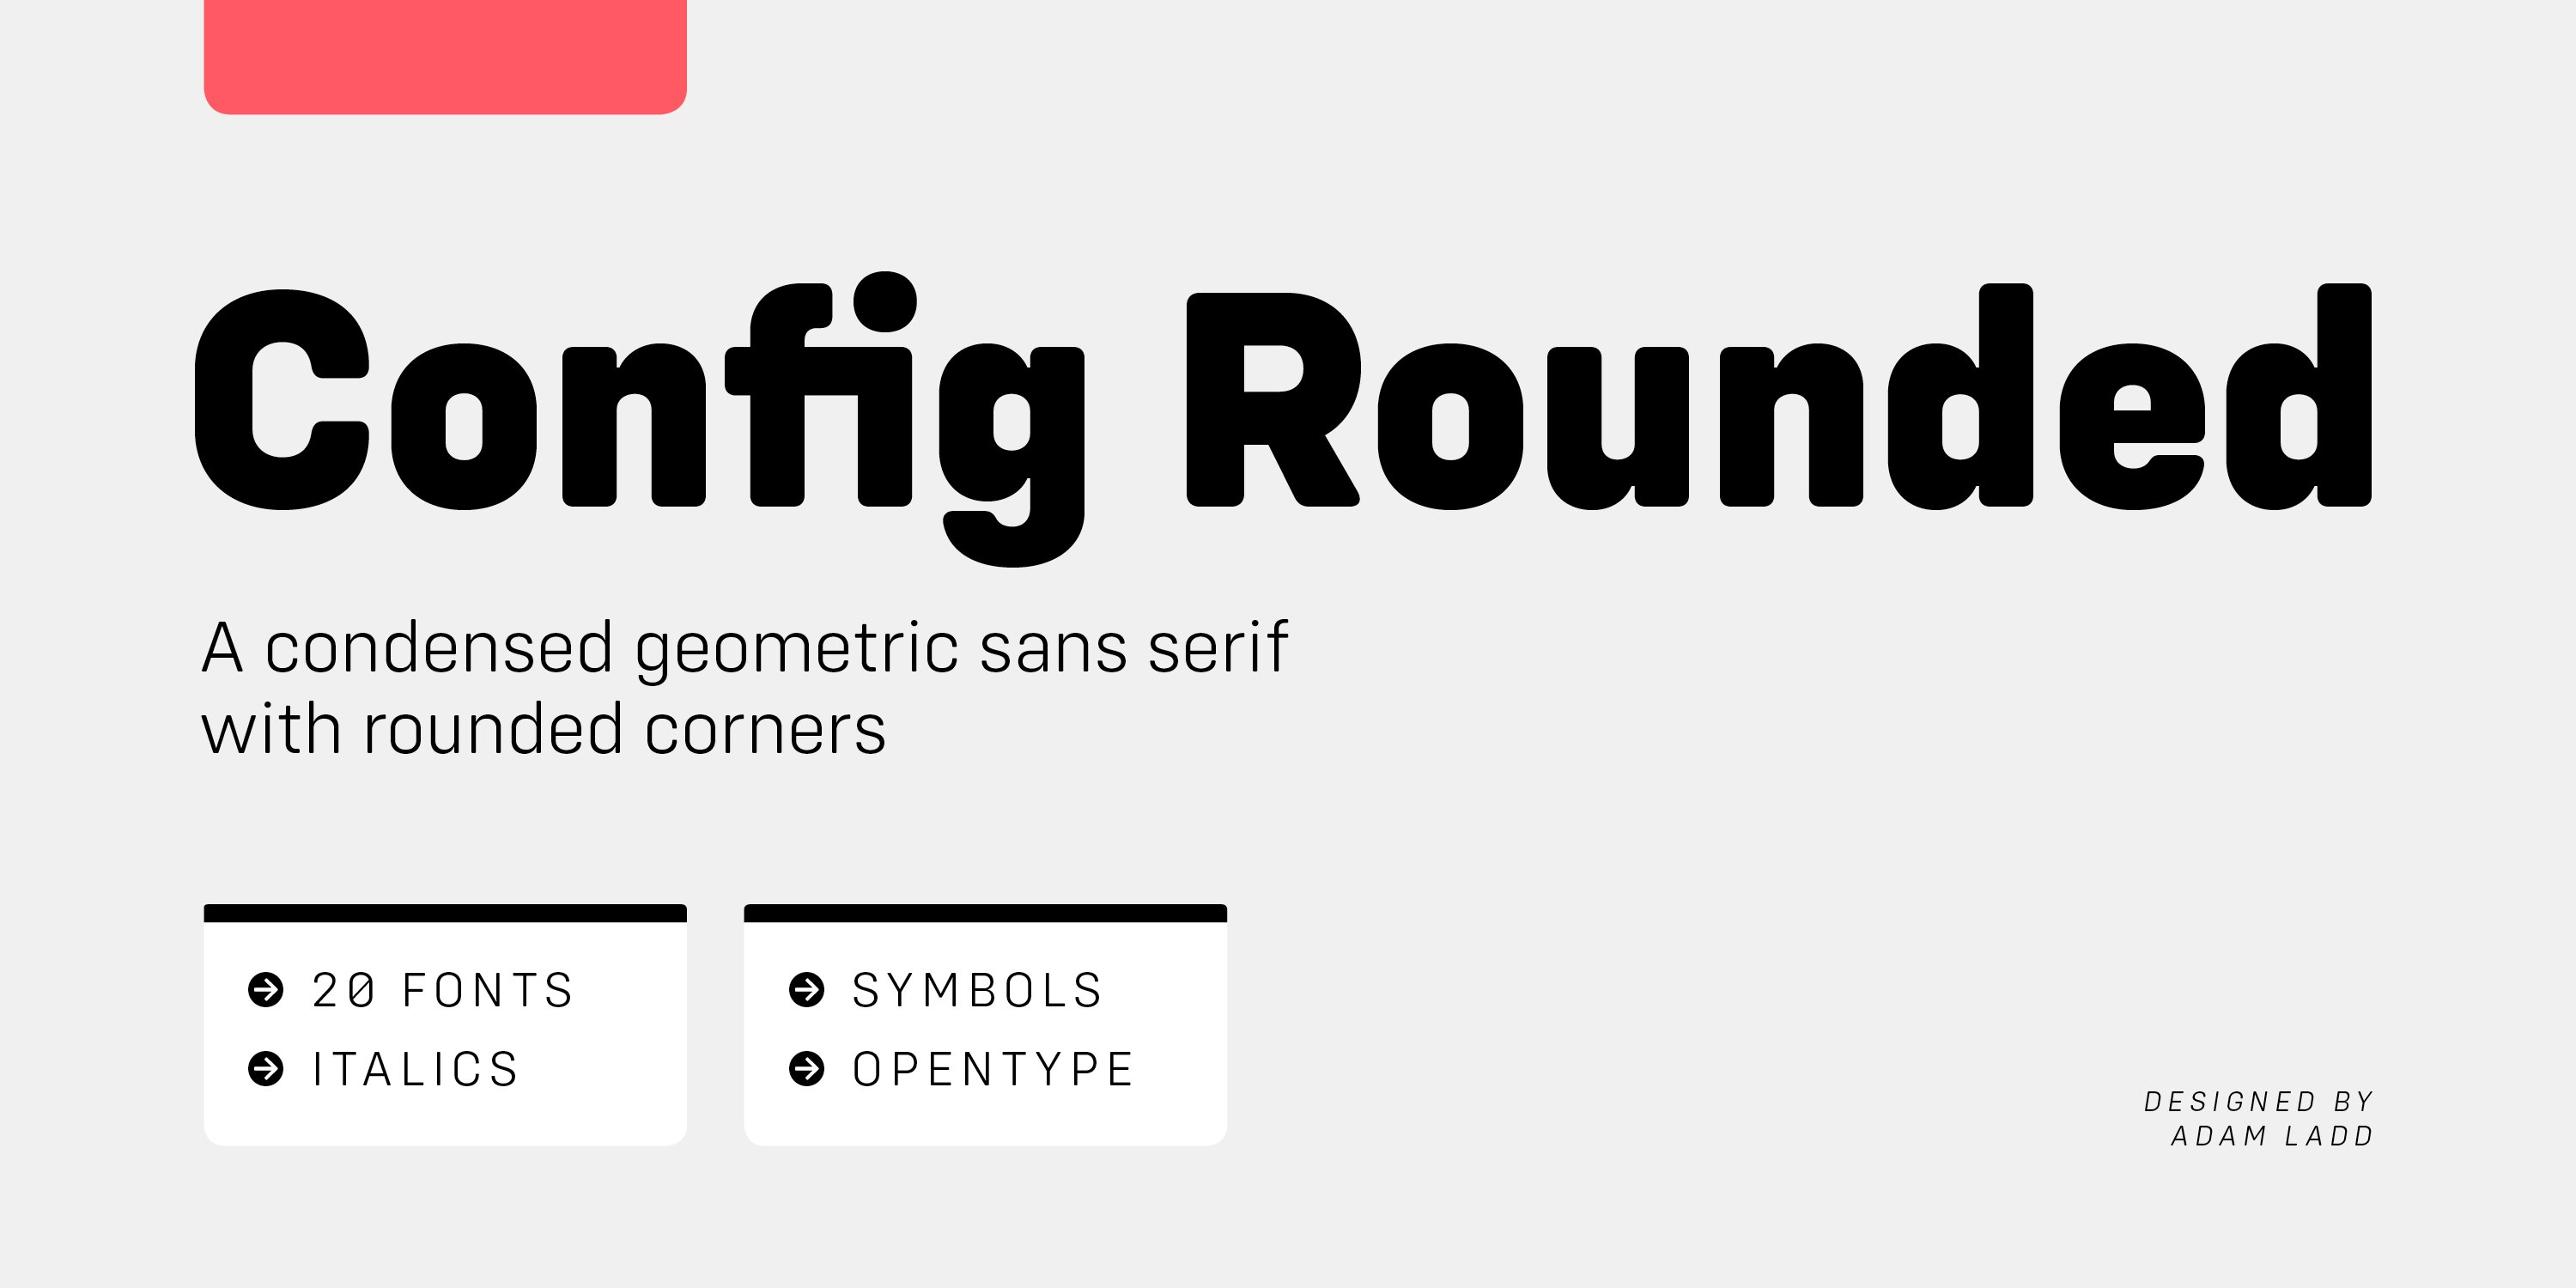 Шрифт Sans Serif Condensed. Шрифт Round. Config шрифт. Corner New шрифт.